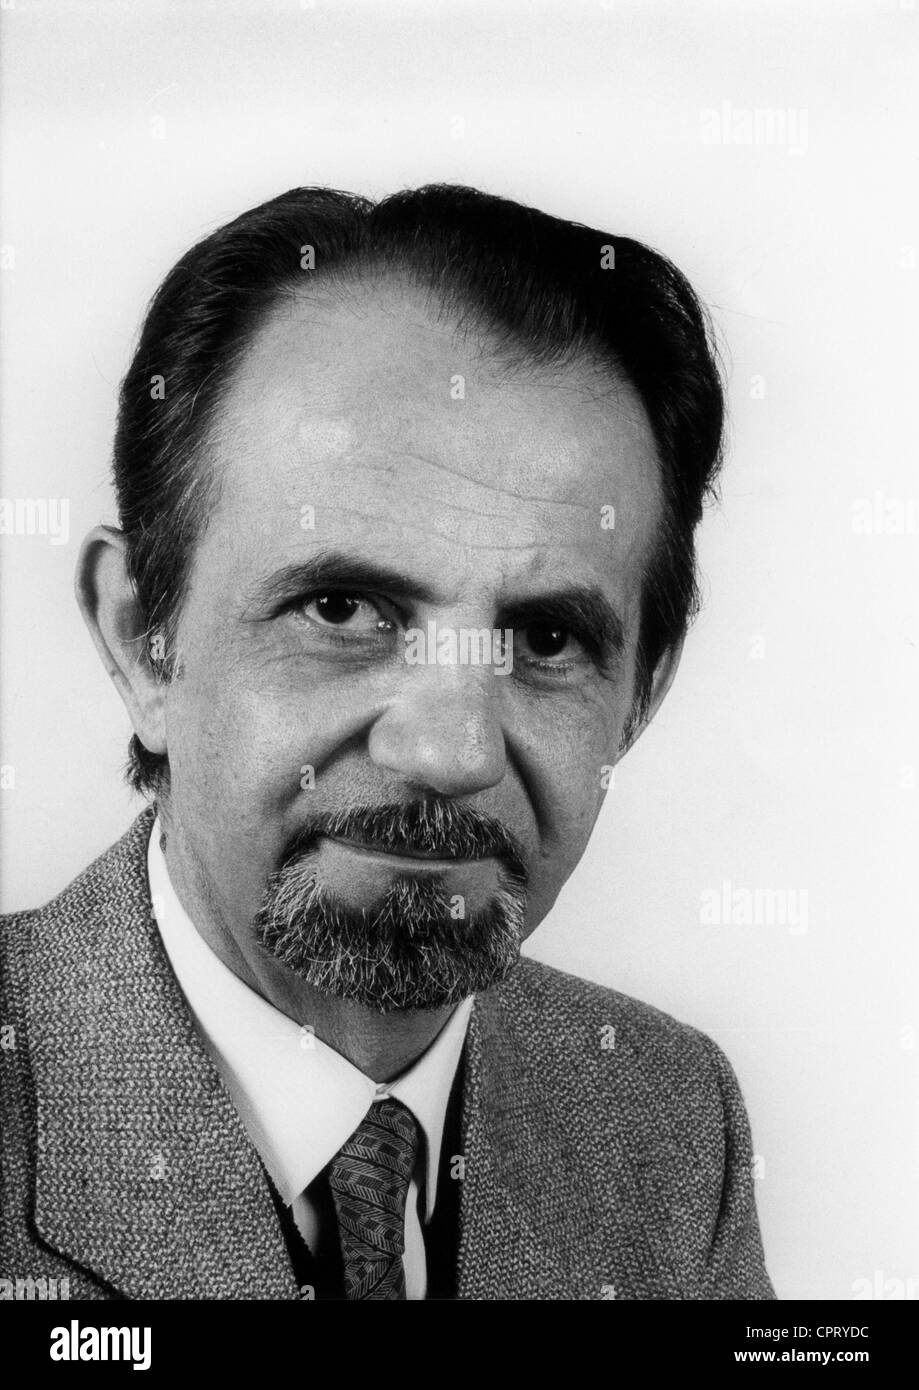 Saridakis, George, Europaabgeordneter, portrait, 1980s, Foto Stock